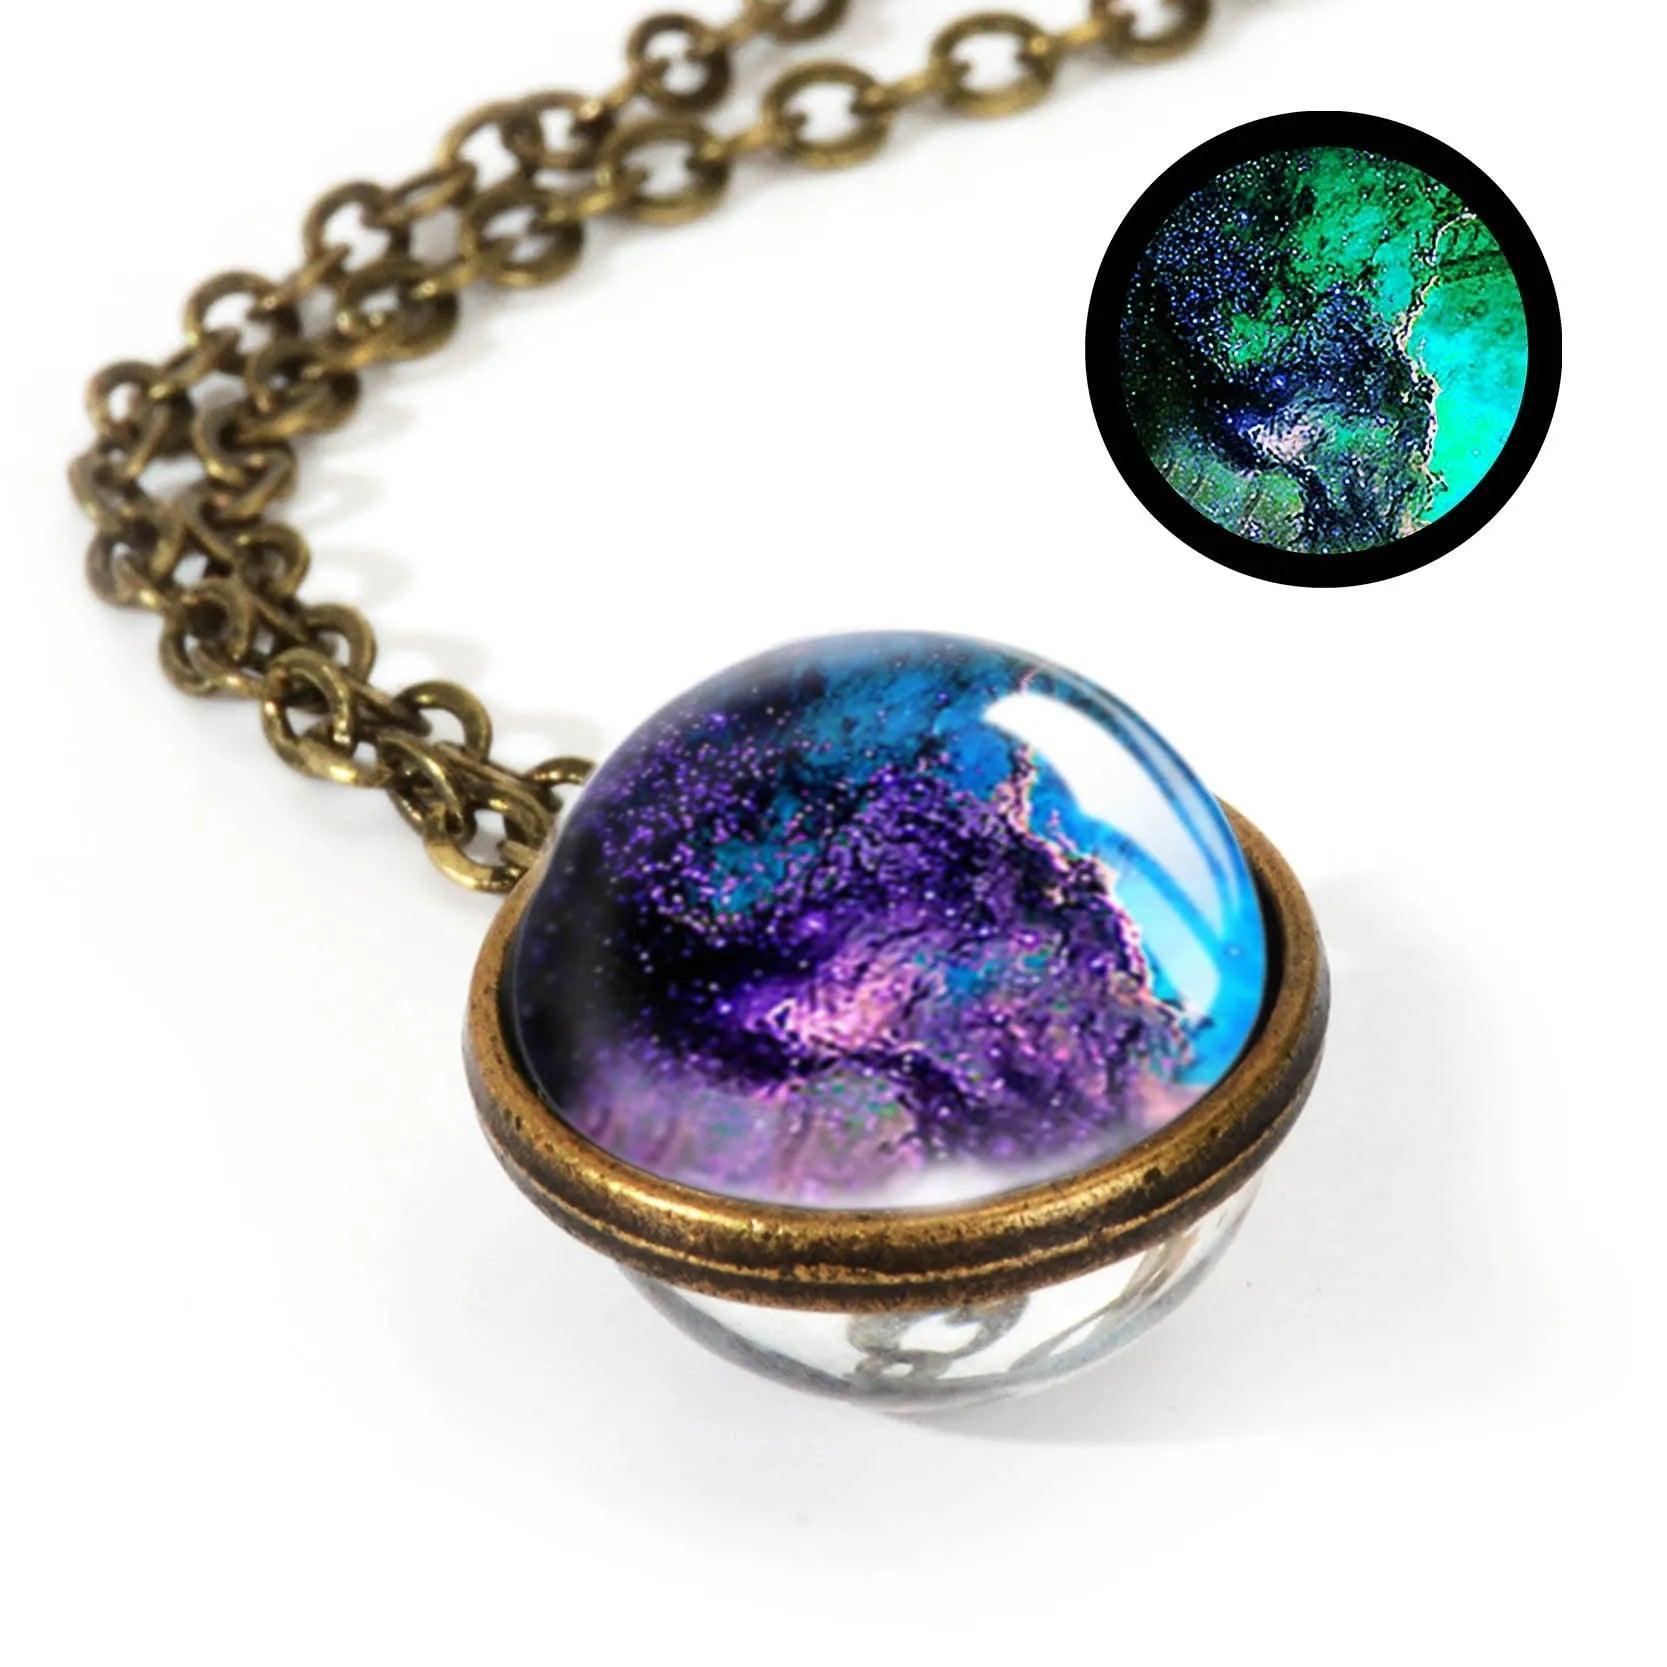 2020 New Nebula Galaxy Double Sided Pendant Necklace Universe Planet Jewelry Glass Art Picture Handmade Statement Necklace - ItemBear.com